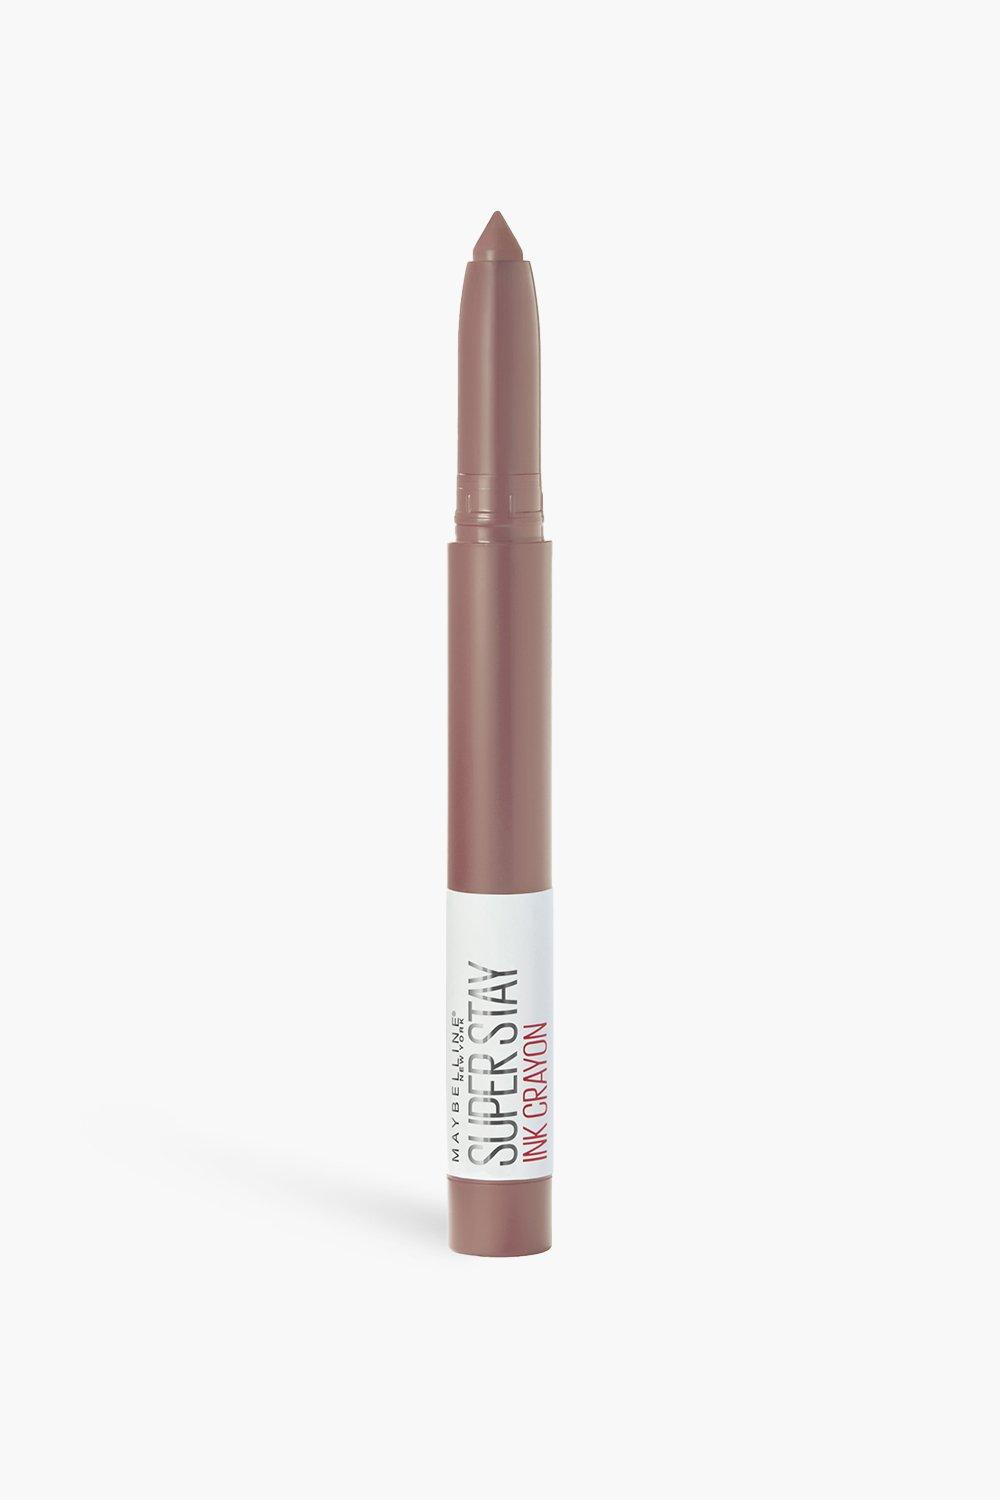 Maybelline Superstay Matte Crayon Lipstick, 10 Trust Your Gut